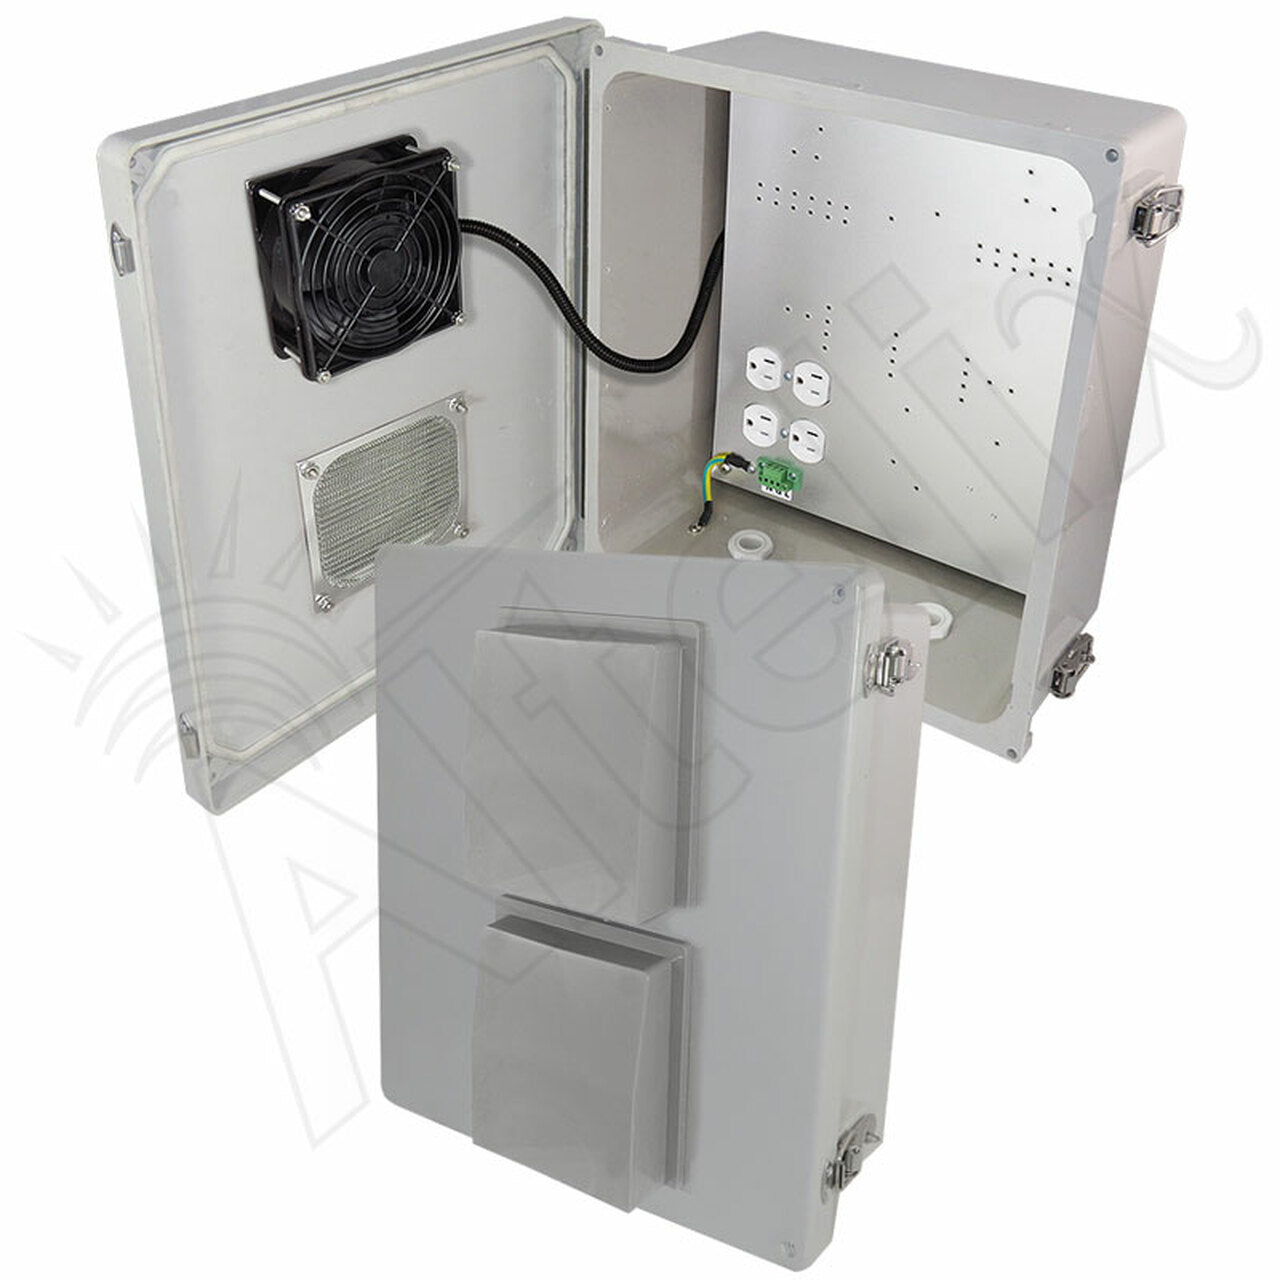 Altelix Fiberglass Vented & Heated Weatherproof NEMA Enclosure with 120 VAC Outlets, 200W Heater & 85°F Turn-On Cooling Fan